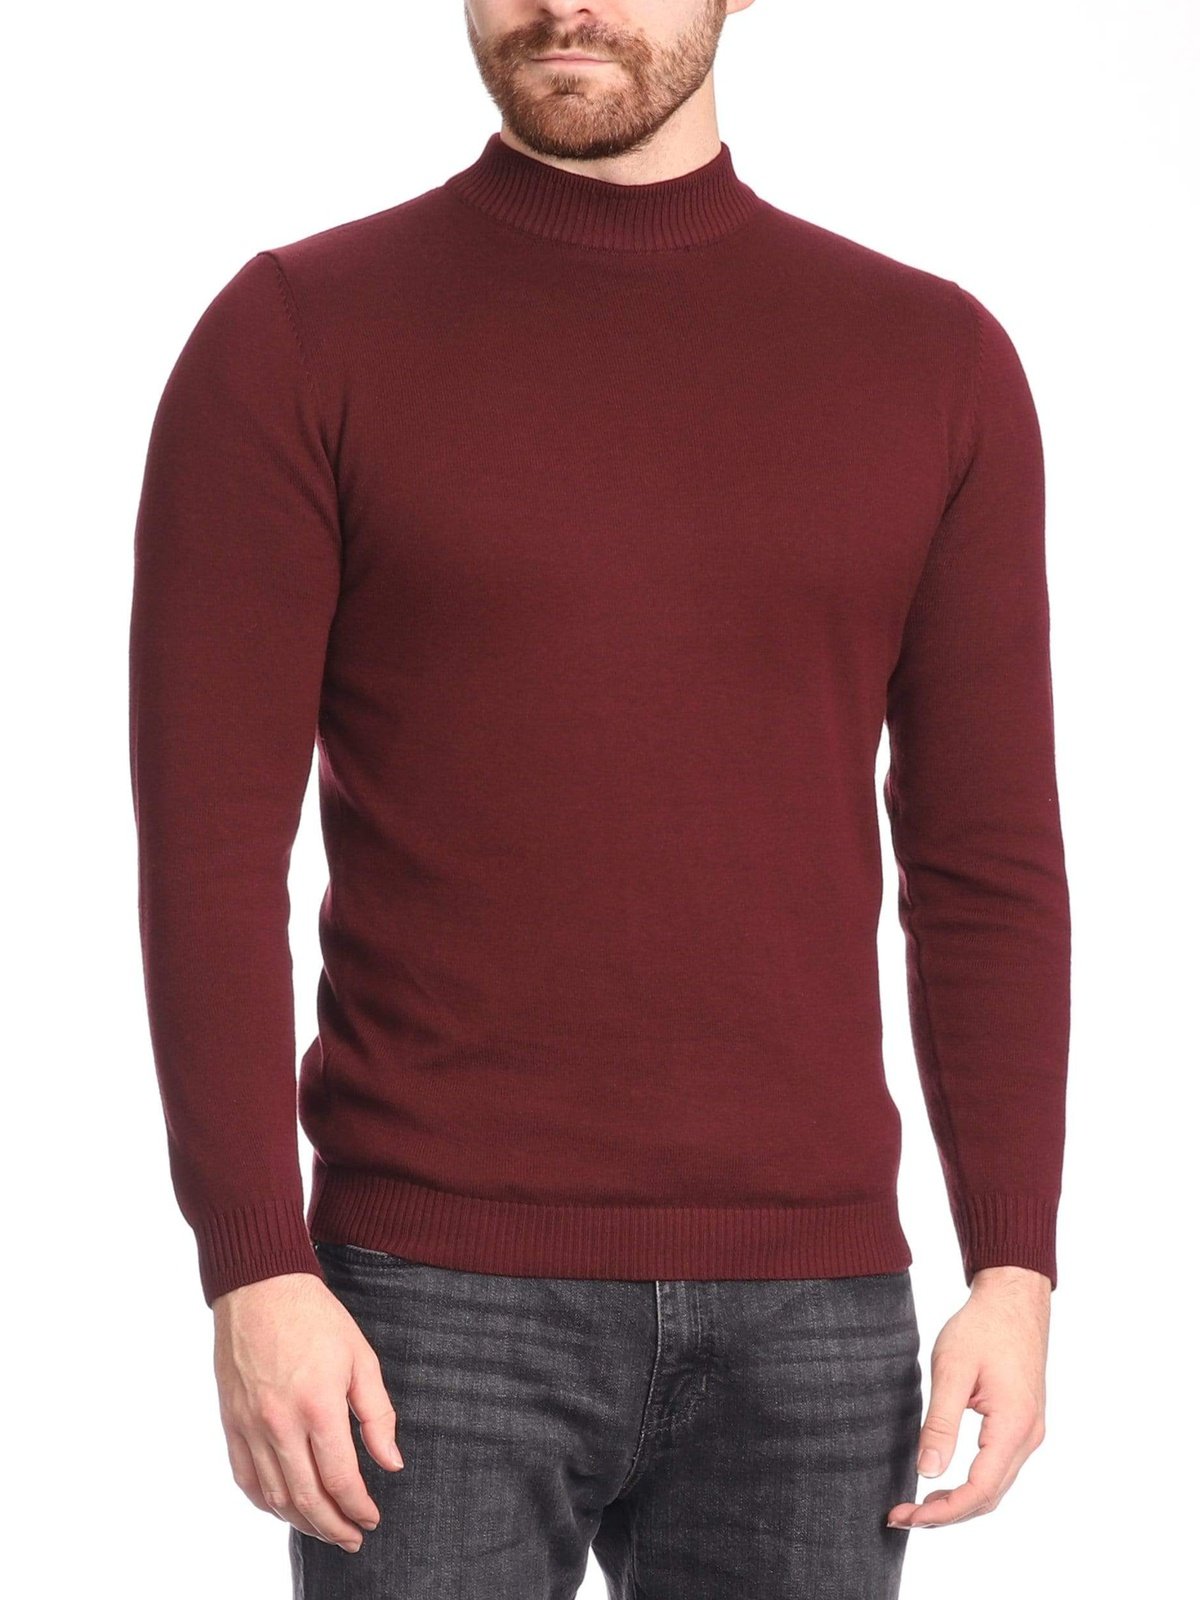 Arthur Black SWEATERS Burgundy / 6XL Arthur Black Men's Solid Burgundy Pullover Cotton Blend Mock Neck Sweater Shirt